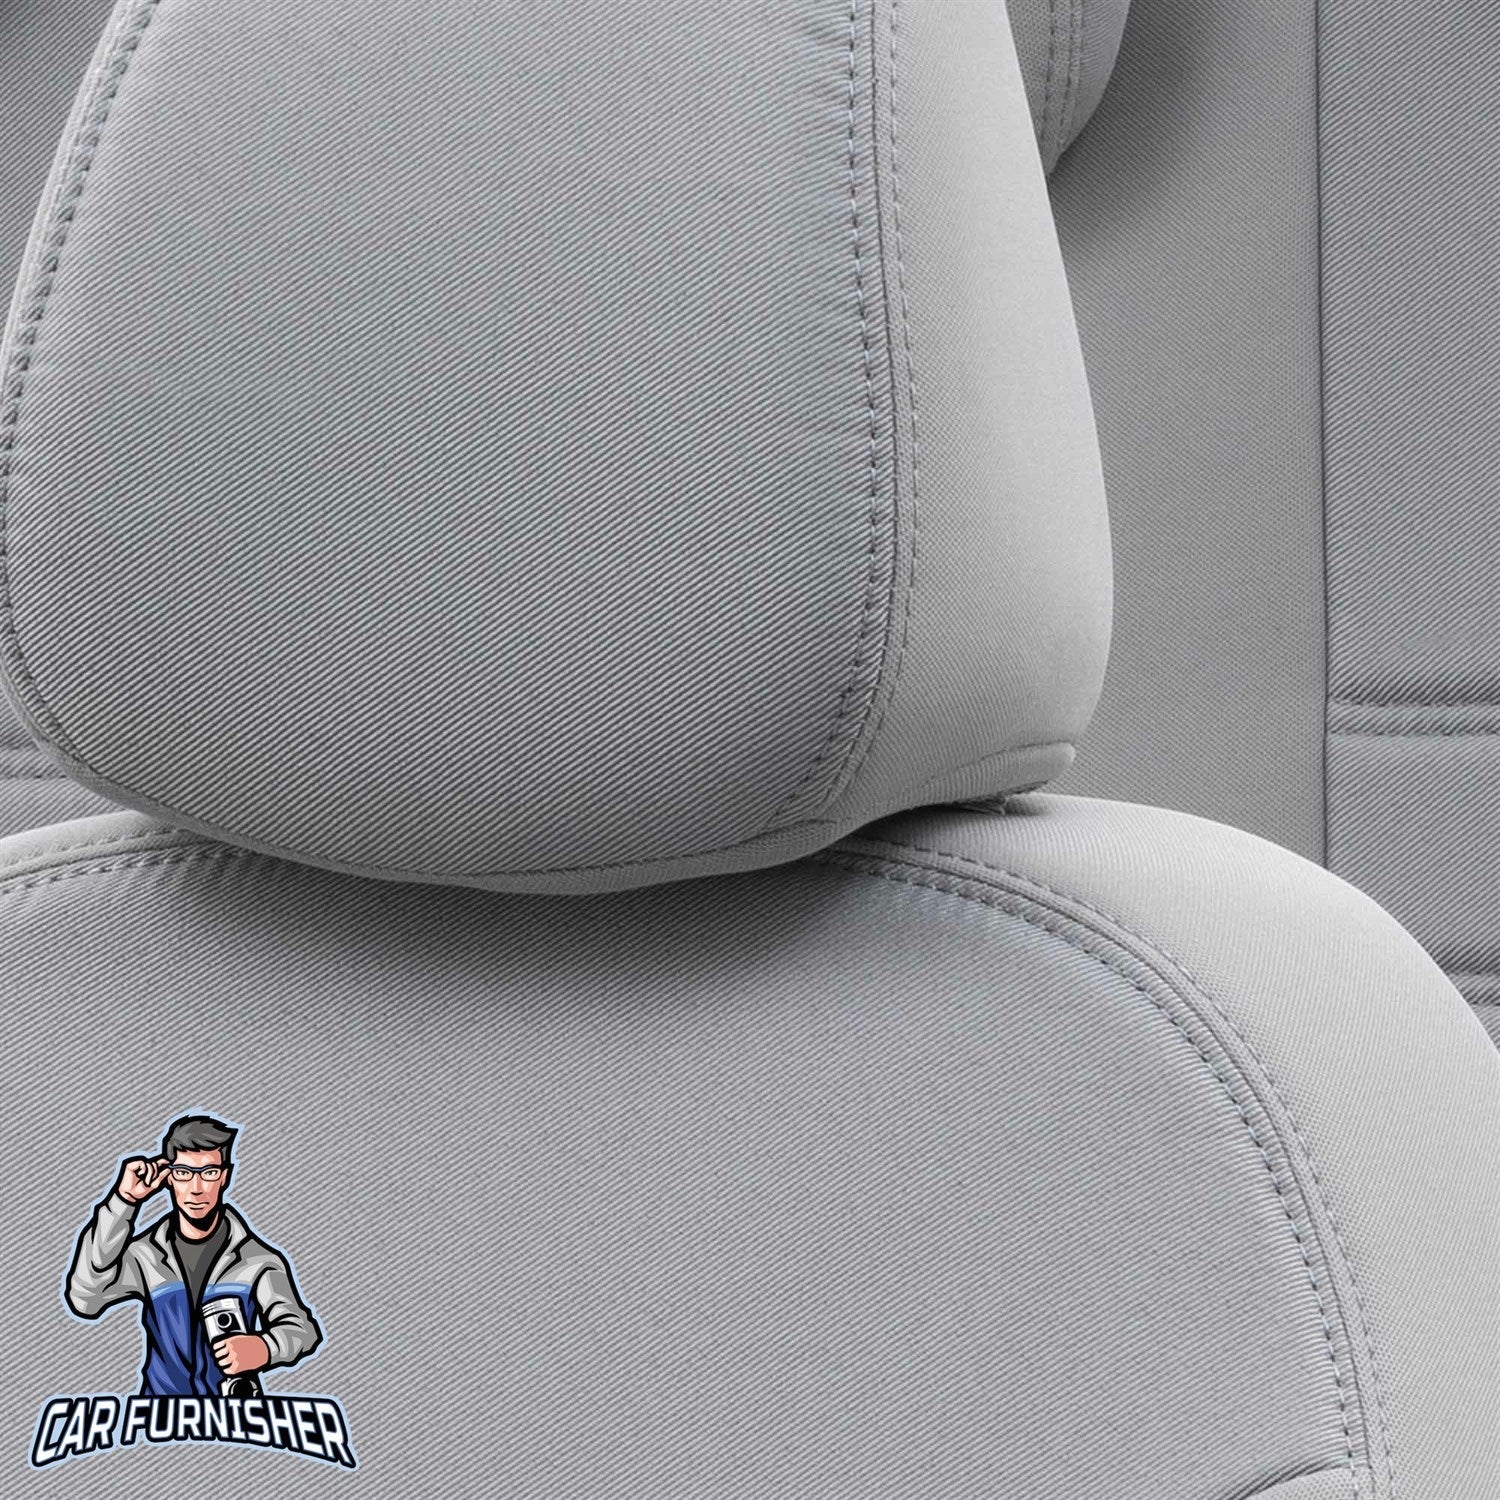 Citroen Berlingo Seat Covers Original Jacquard Design Light Gray Jacquard Fabric